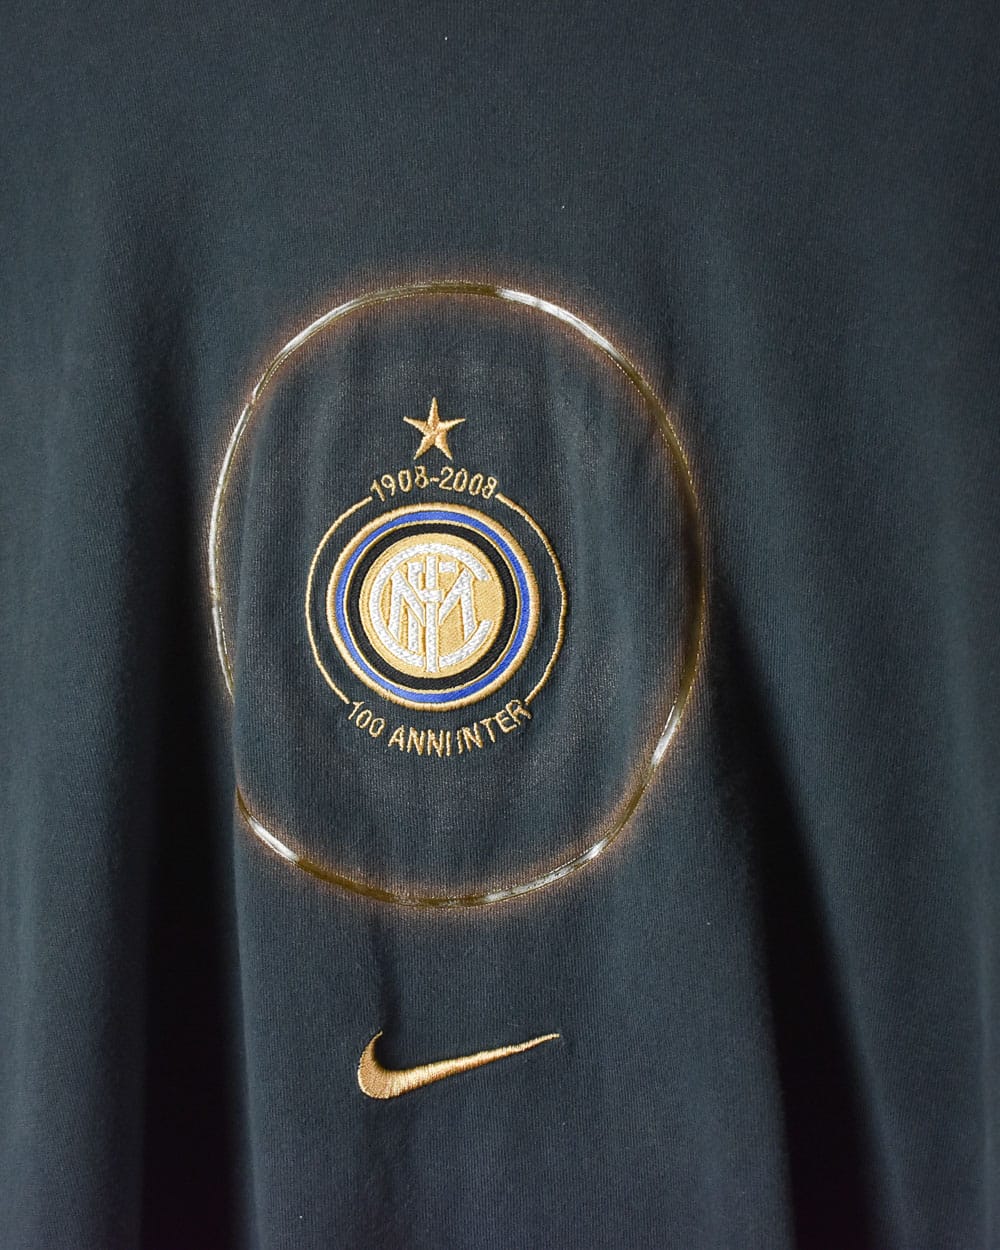 Black Nike Inter Milan 100th Anniversary T-Shirt - X-Small